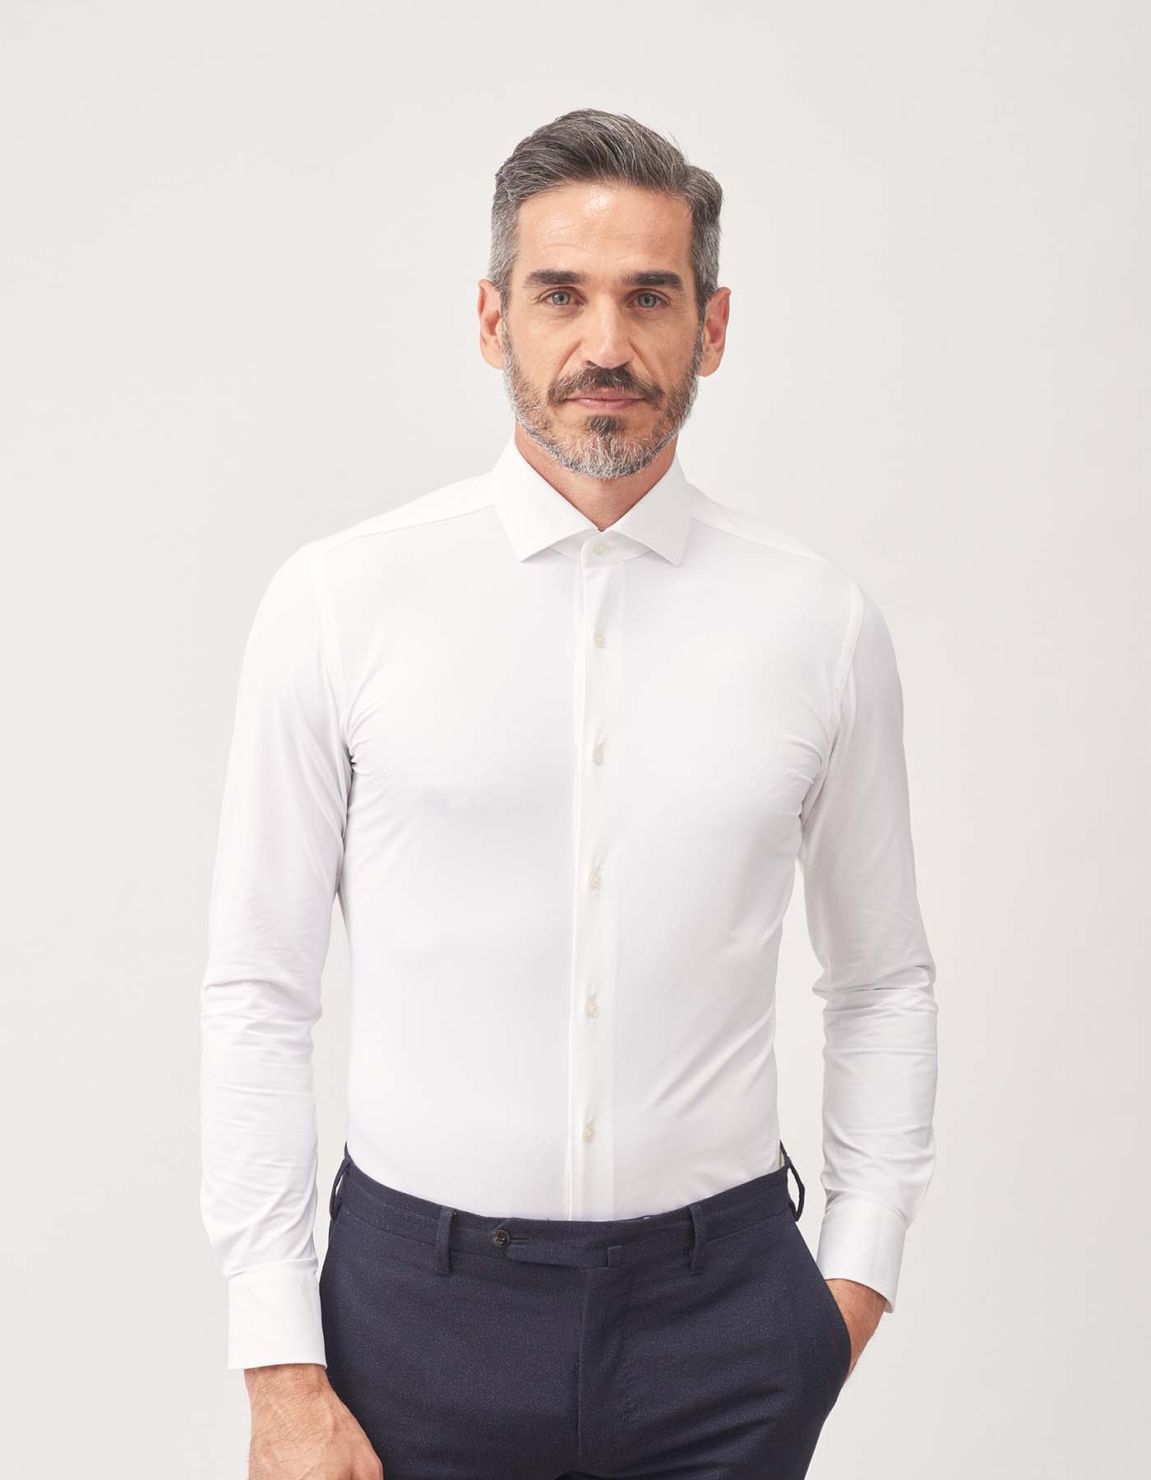 Shirt Collar small cutaway White Twill Tailor Custom Fit 6